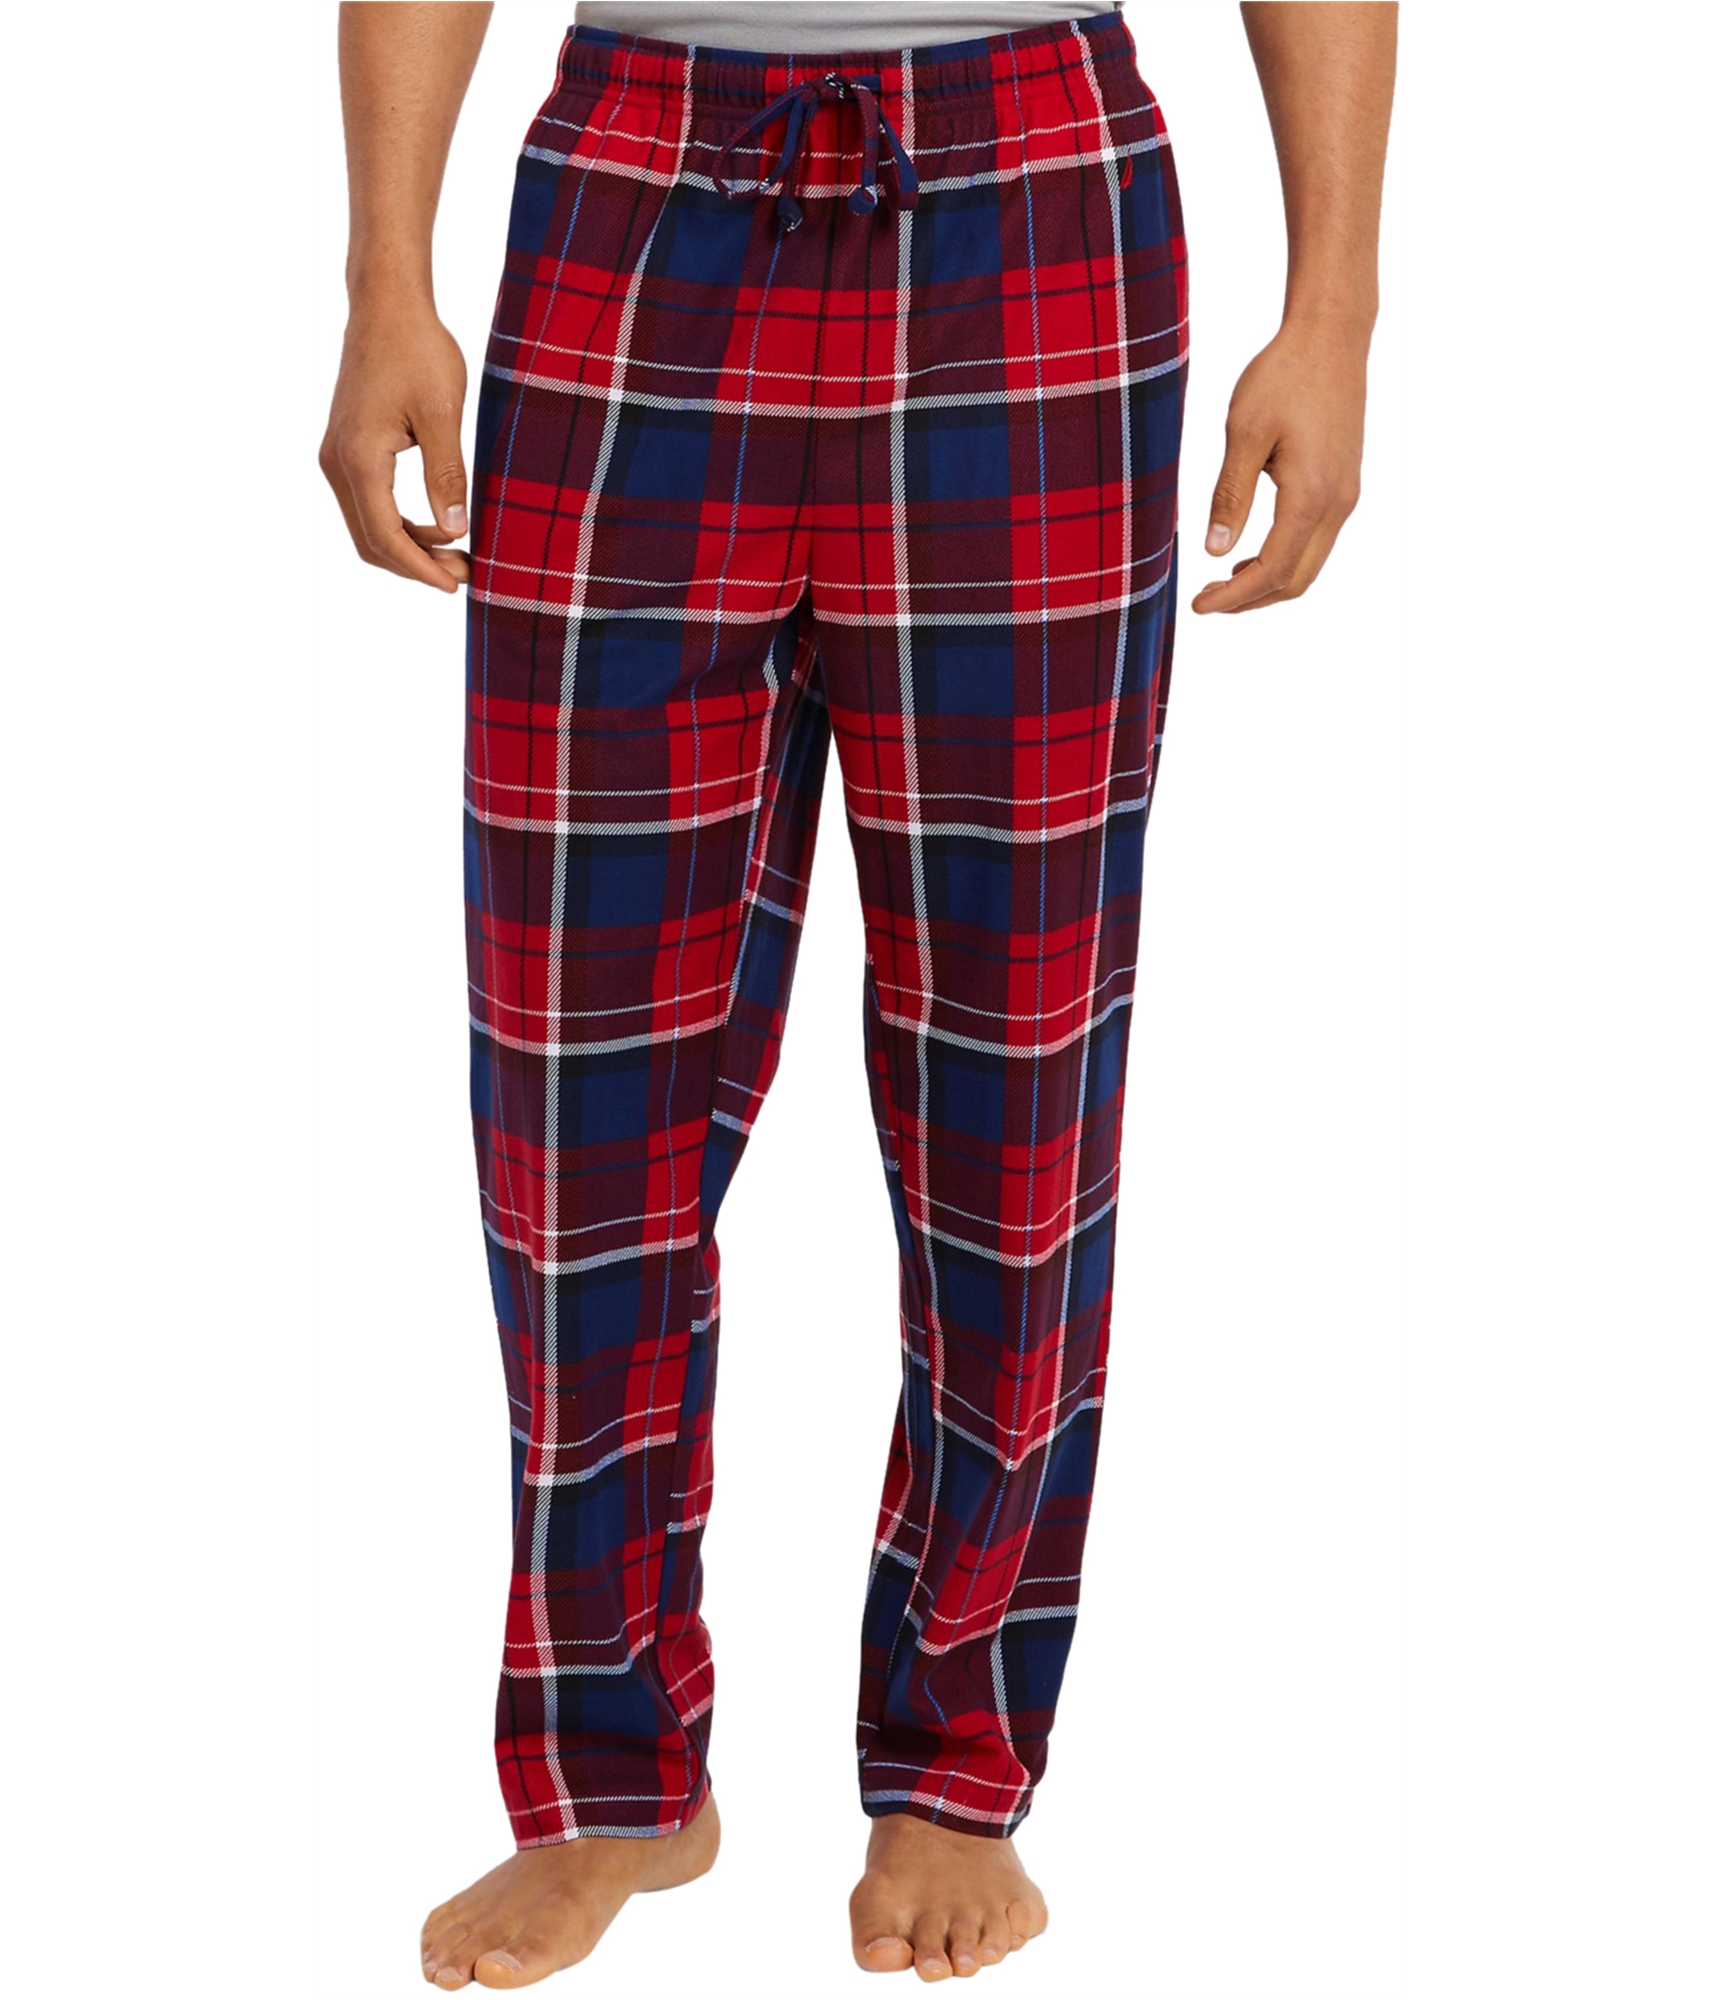 Nautica Mens Plaid Fleece Pajama Lounge Pants, Red, X-Large | eBay